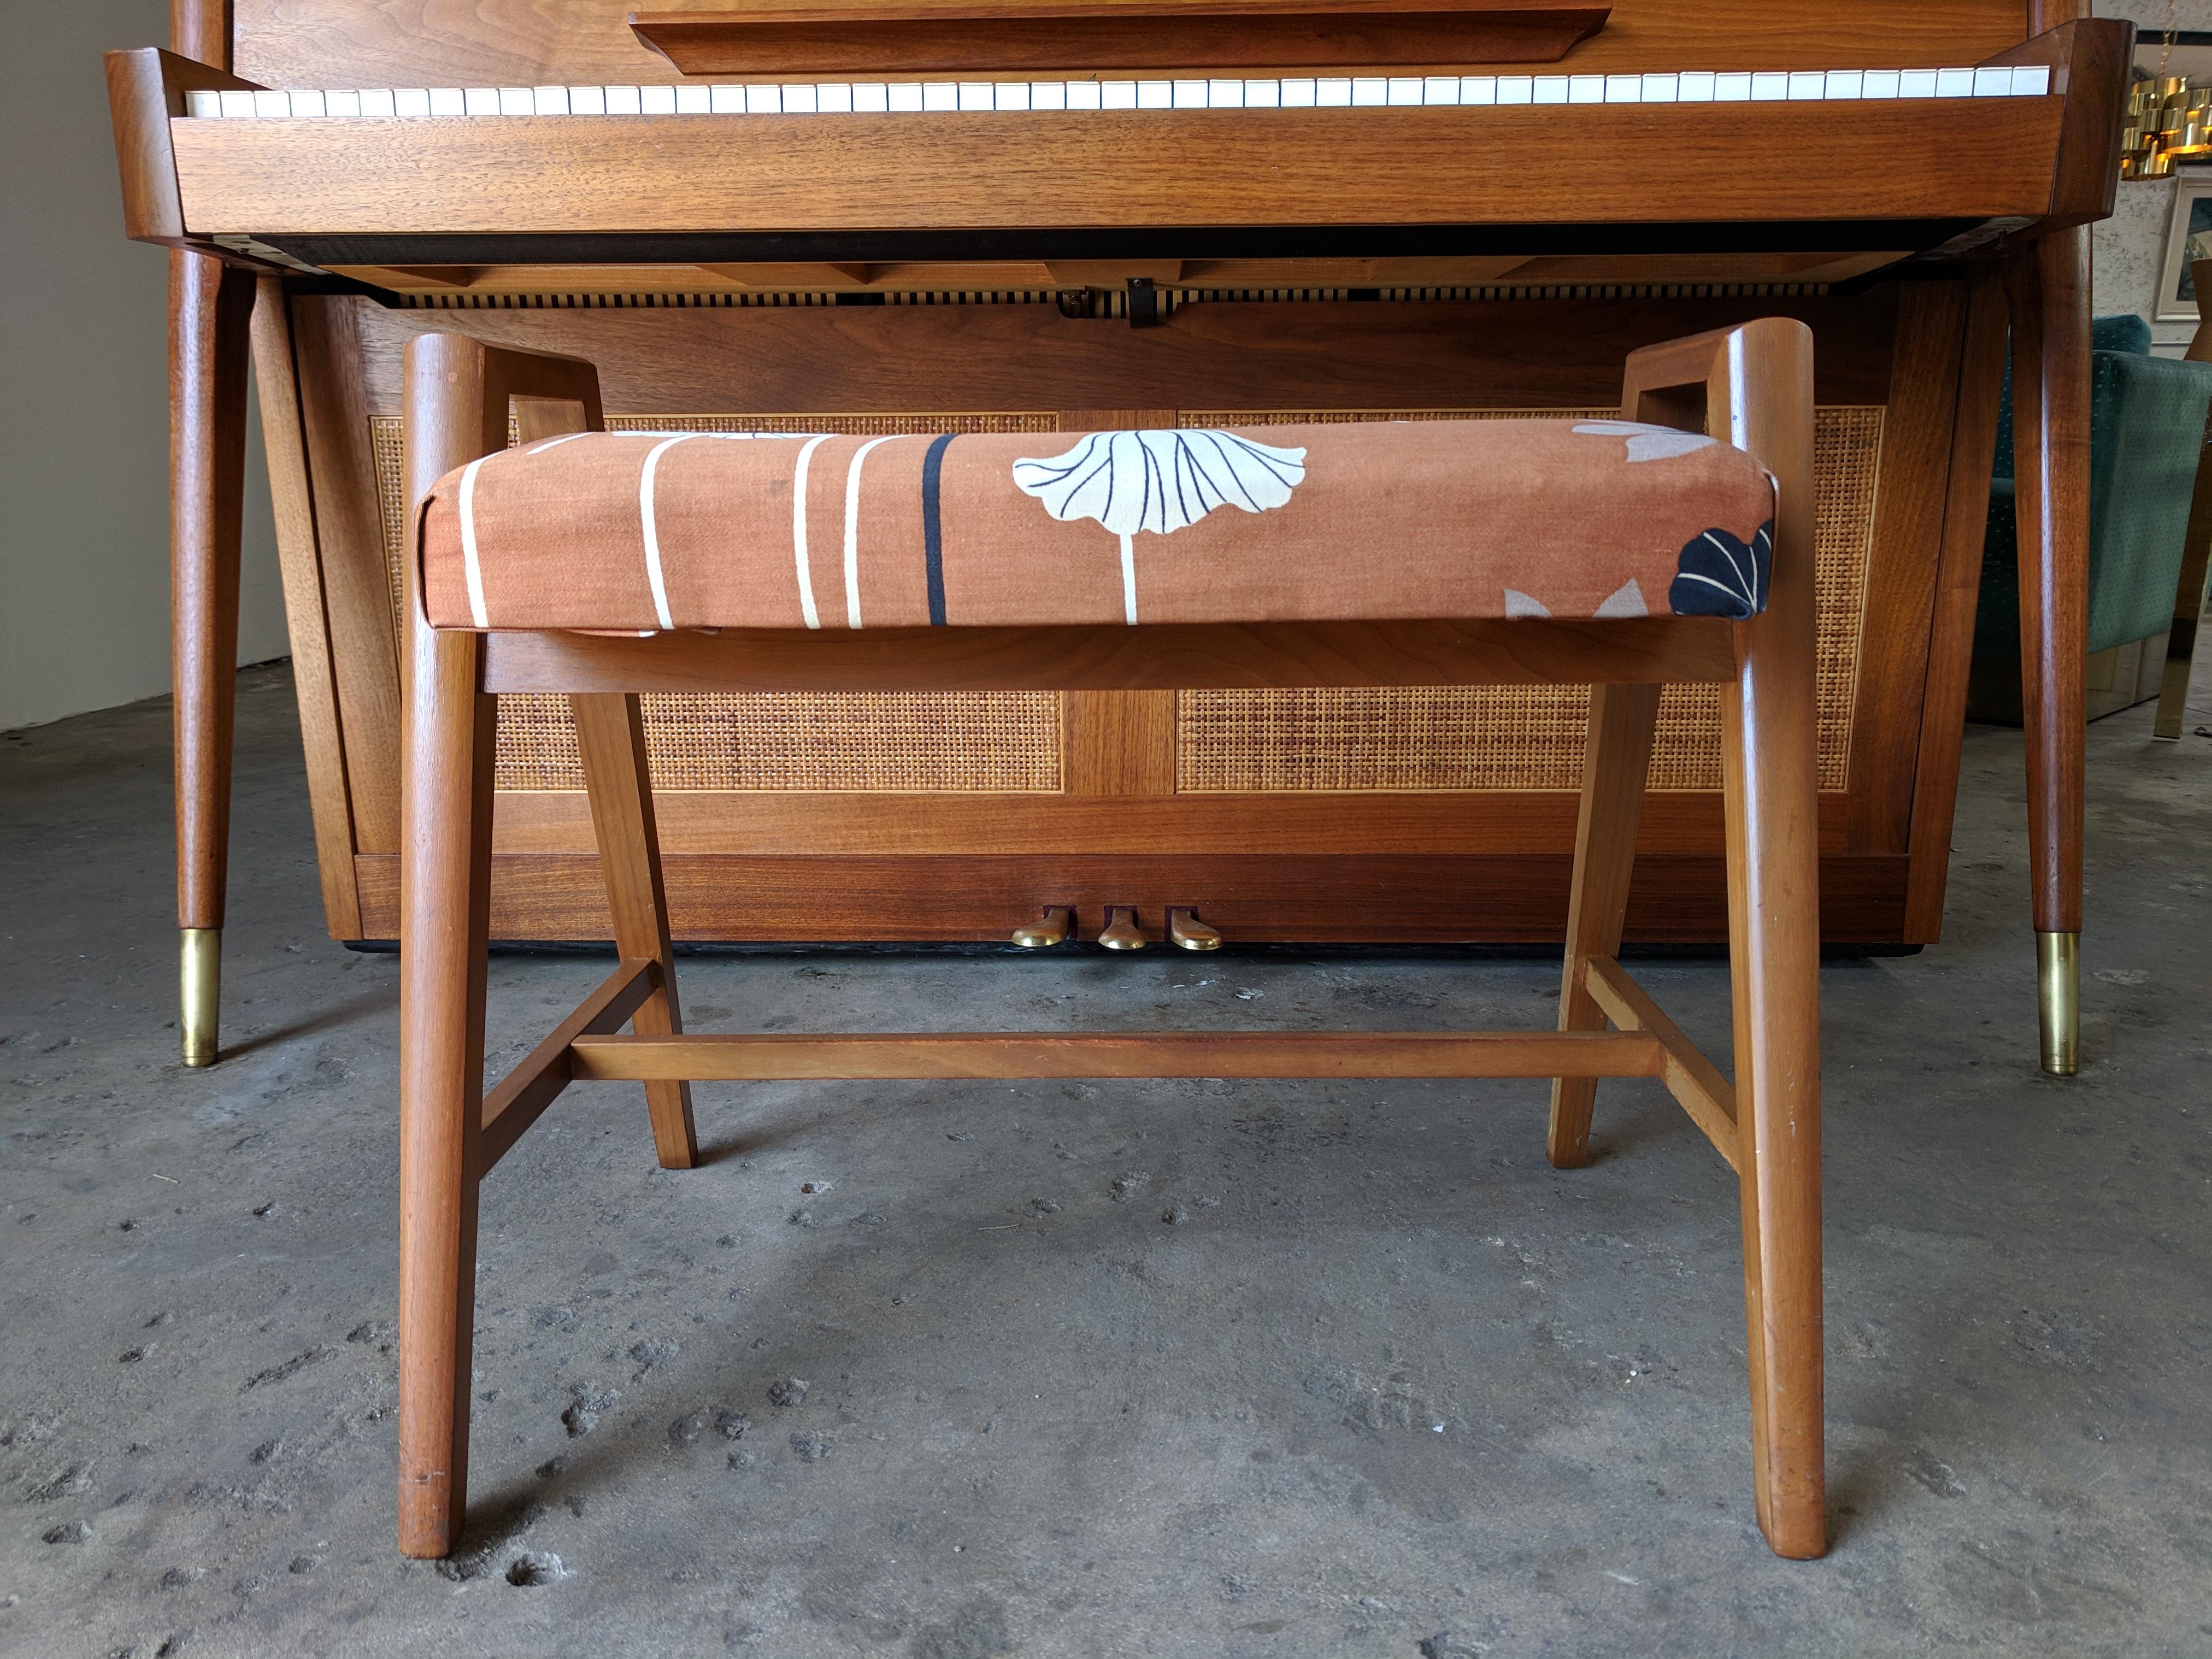 Stunning Midcentury Baldwin Acrosonic Spinet Piano with Matching Bench 5